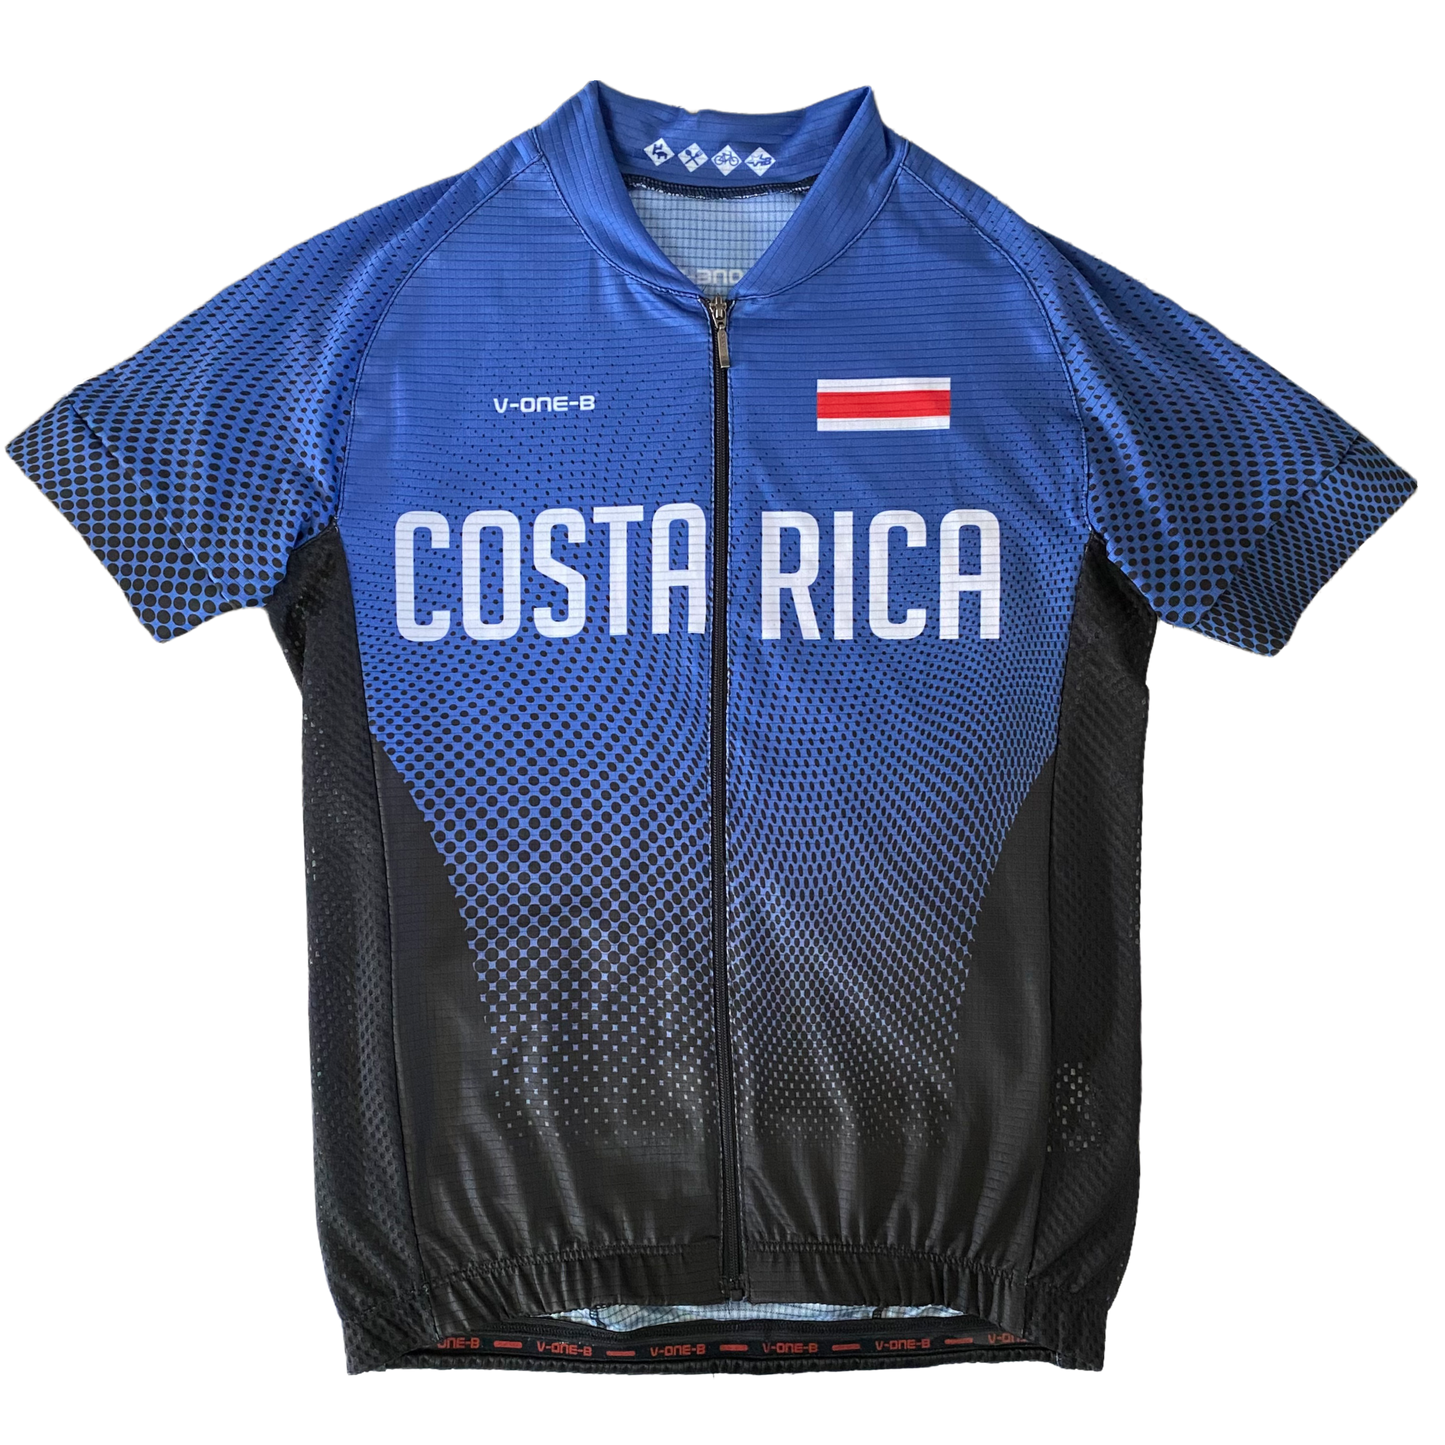 Jersey Costa Rica-02